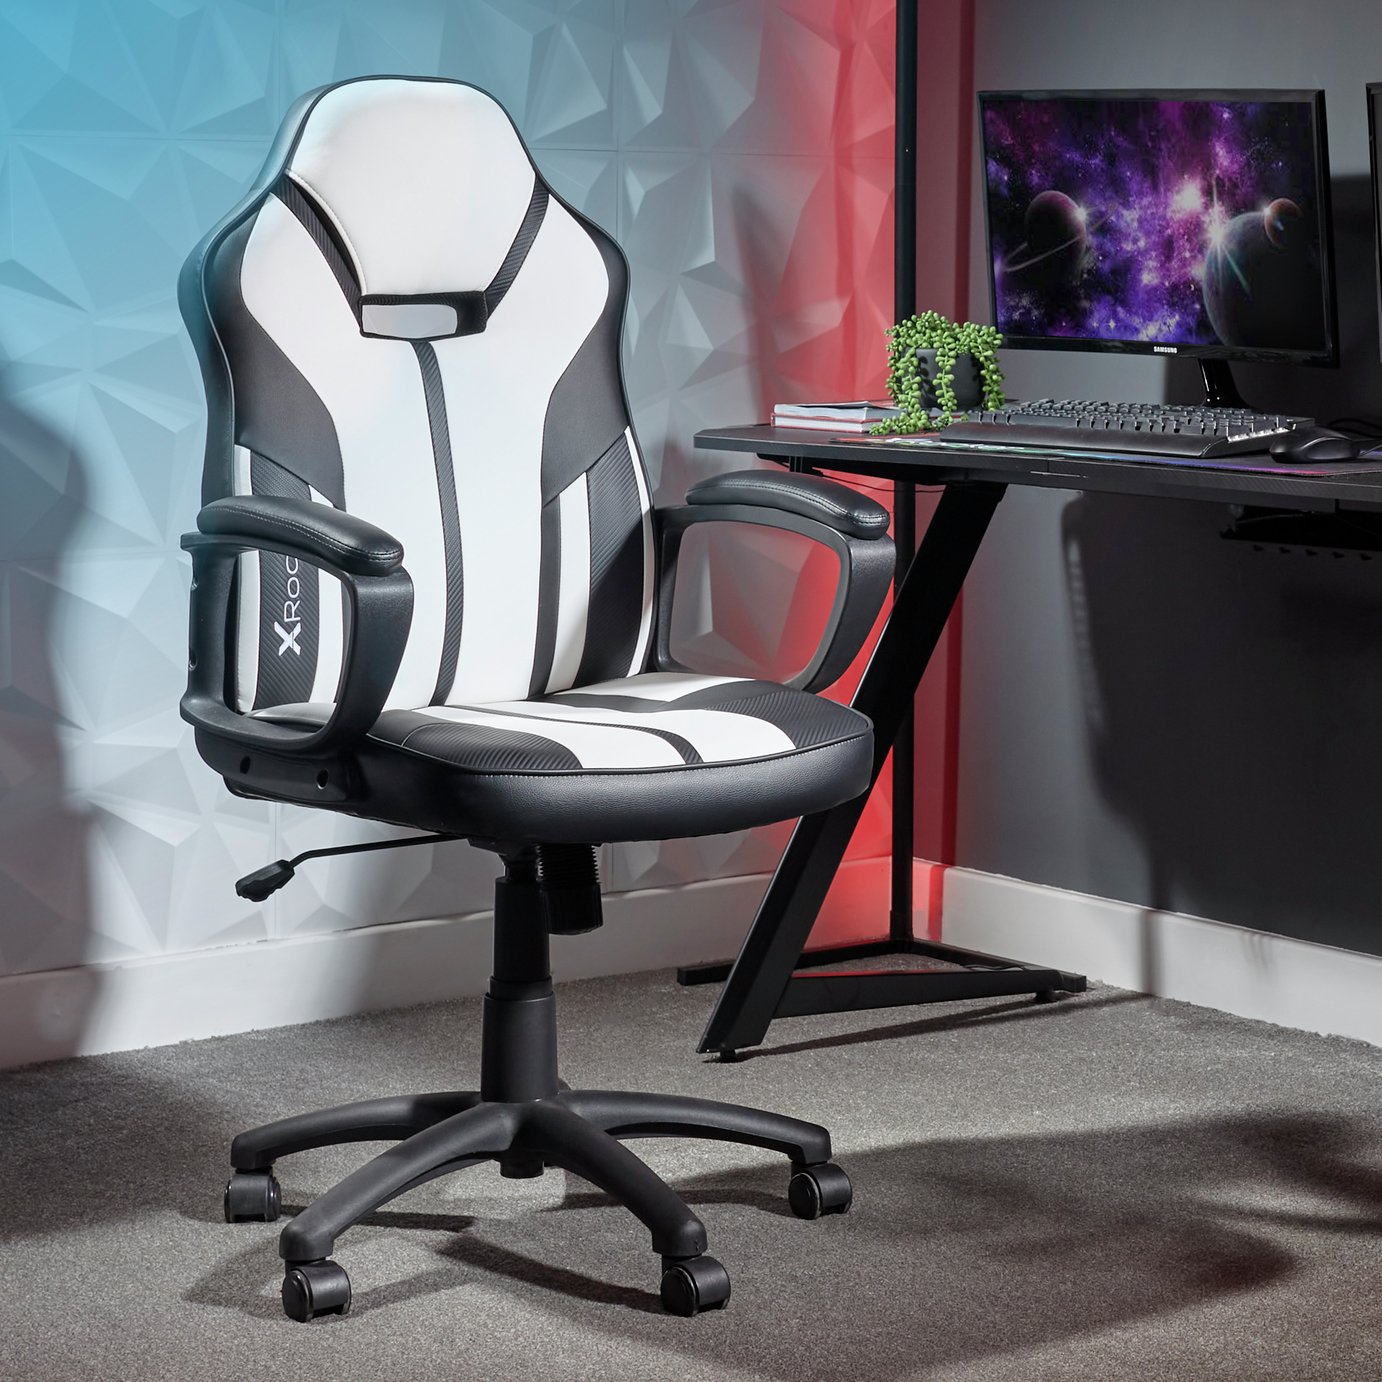 X Rocker Lunar Ergonomic Office Gaming Chair - Black & White